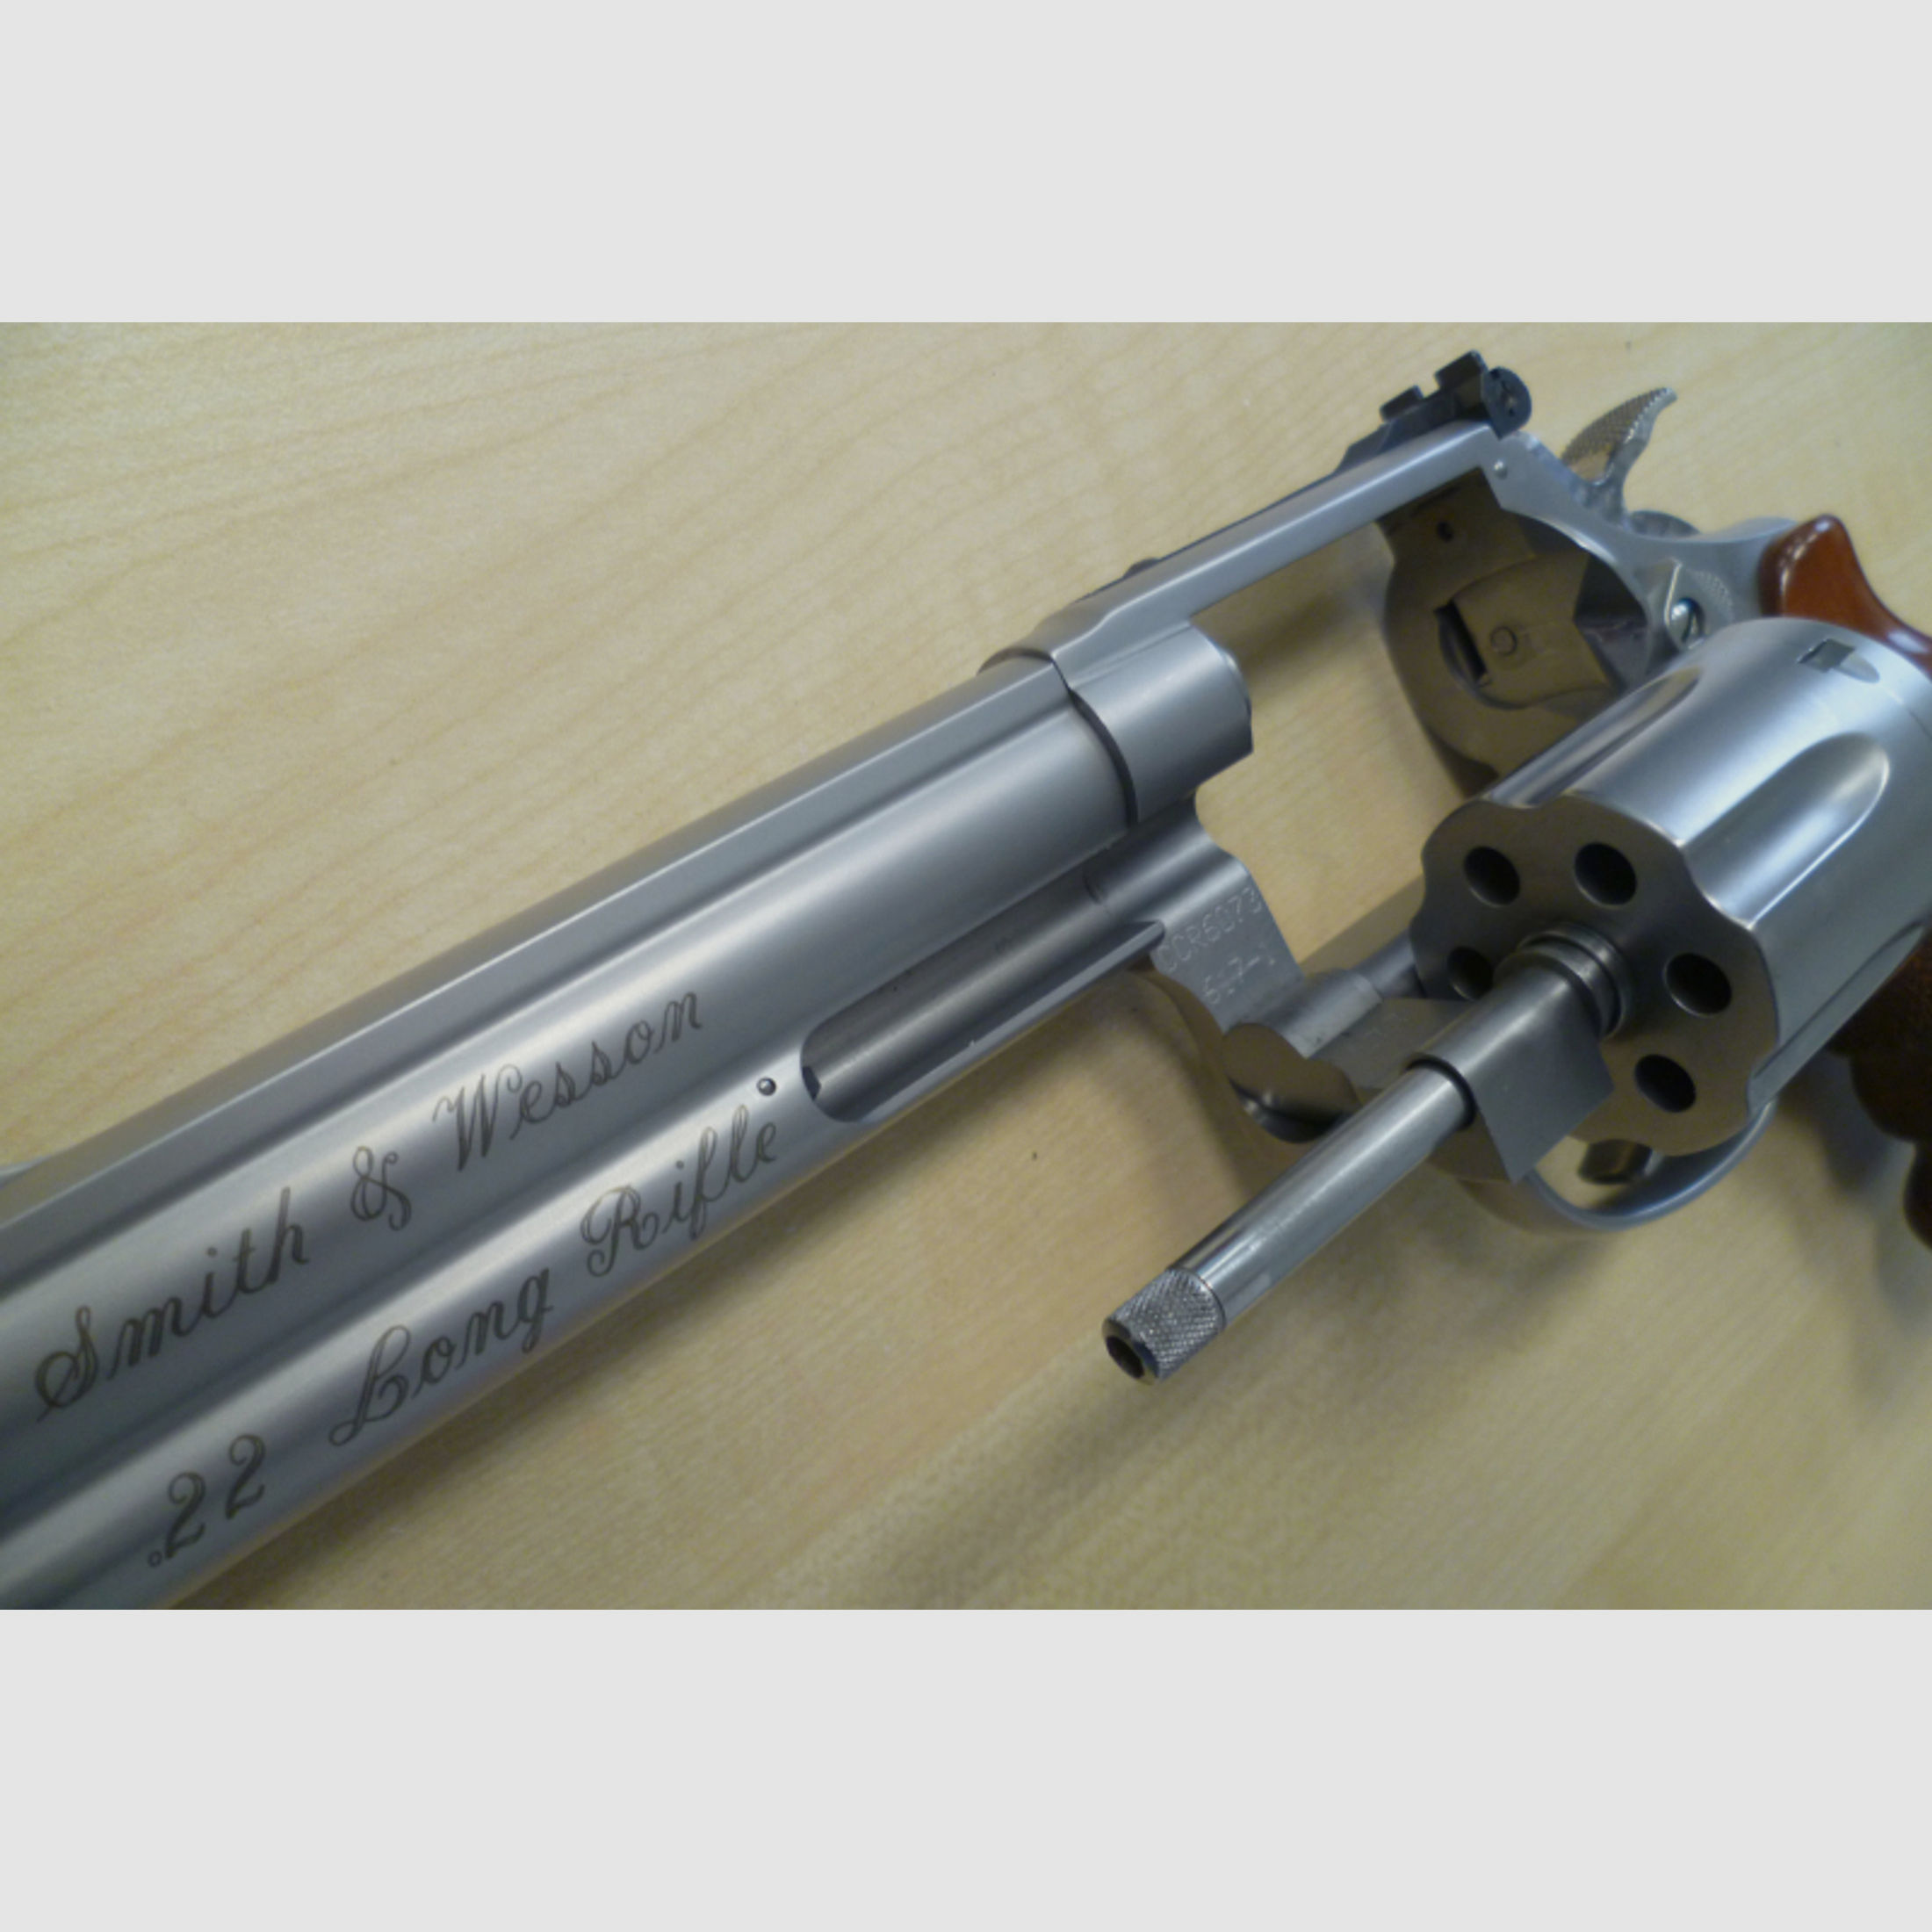 Revolver Smith & Wesson Model 617 Target Champion .22 lr.